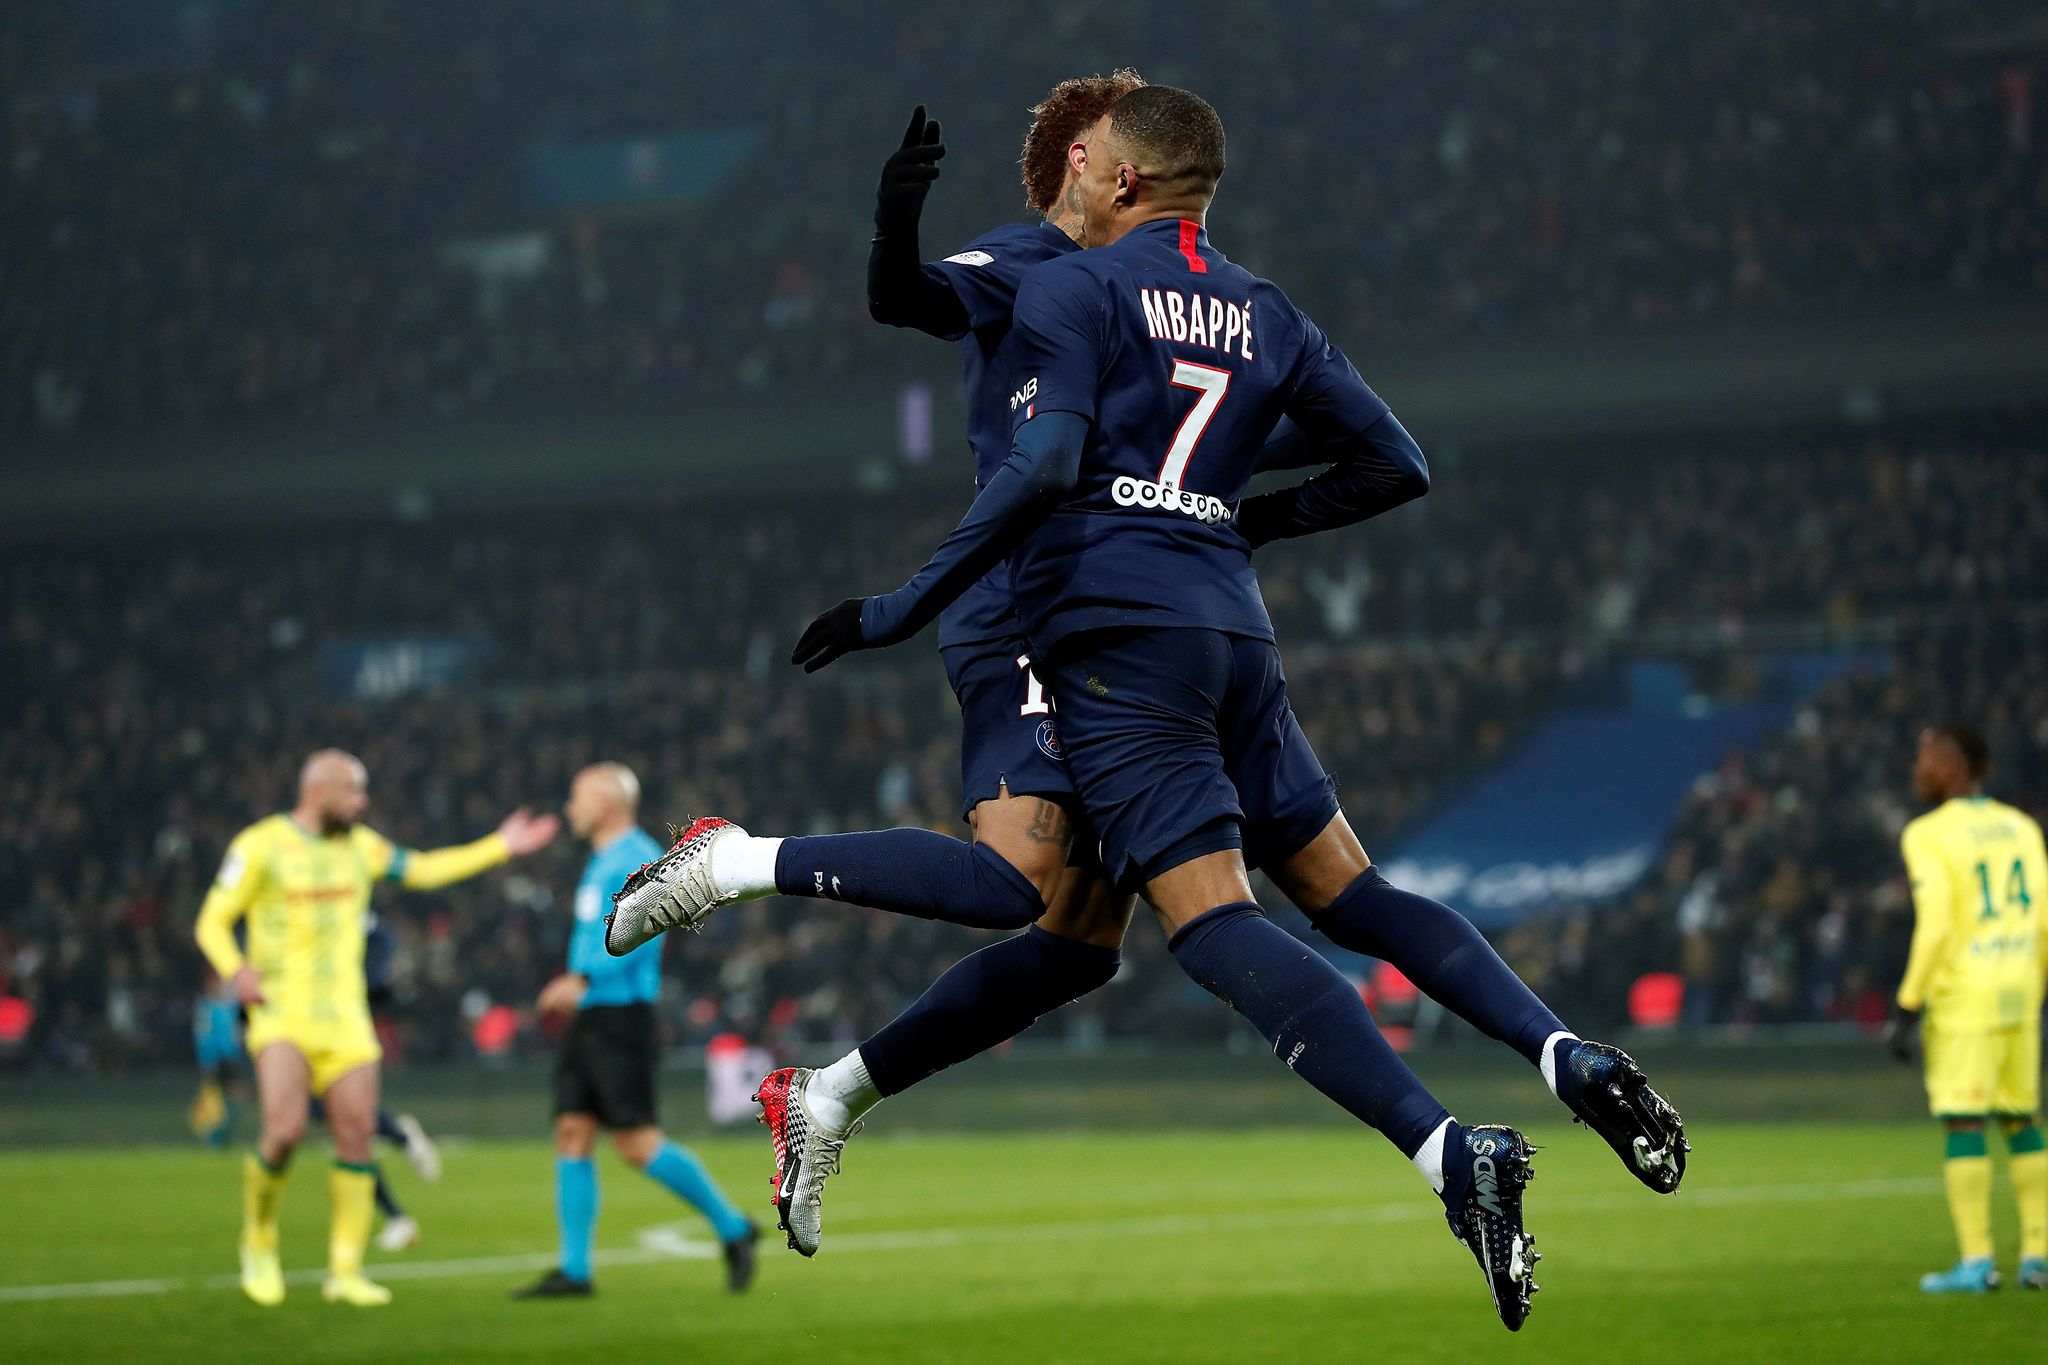 PSG vs Nantes: Mbappe and Neymar down Nantes - Ligue 1